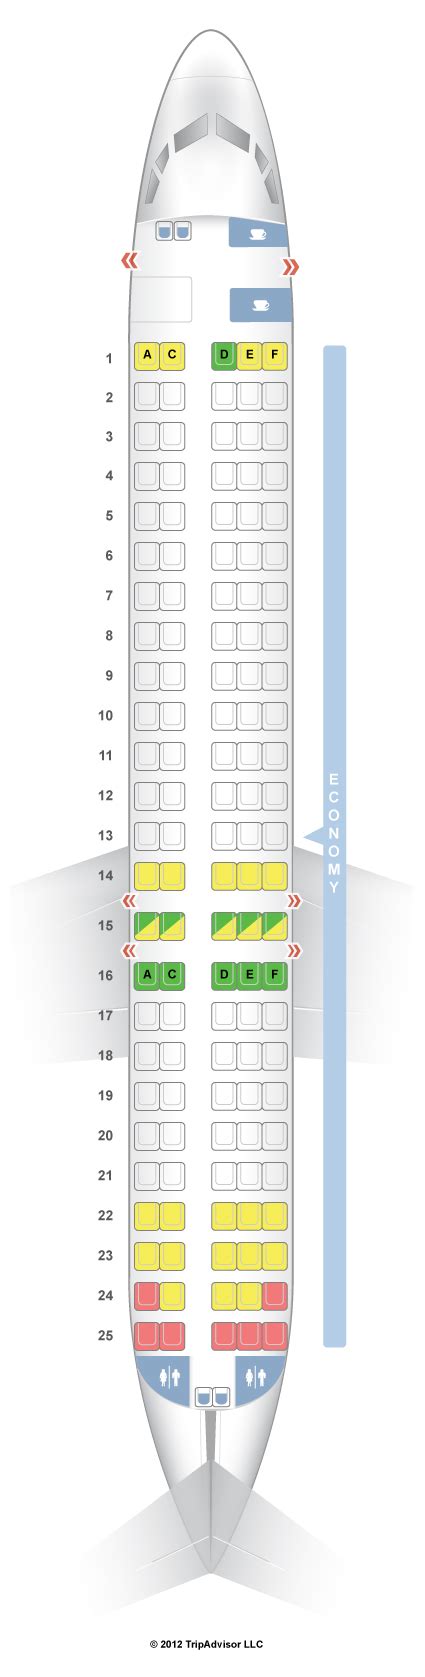 Boeing 717 Seat Map